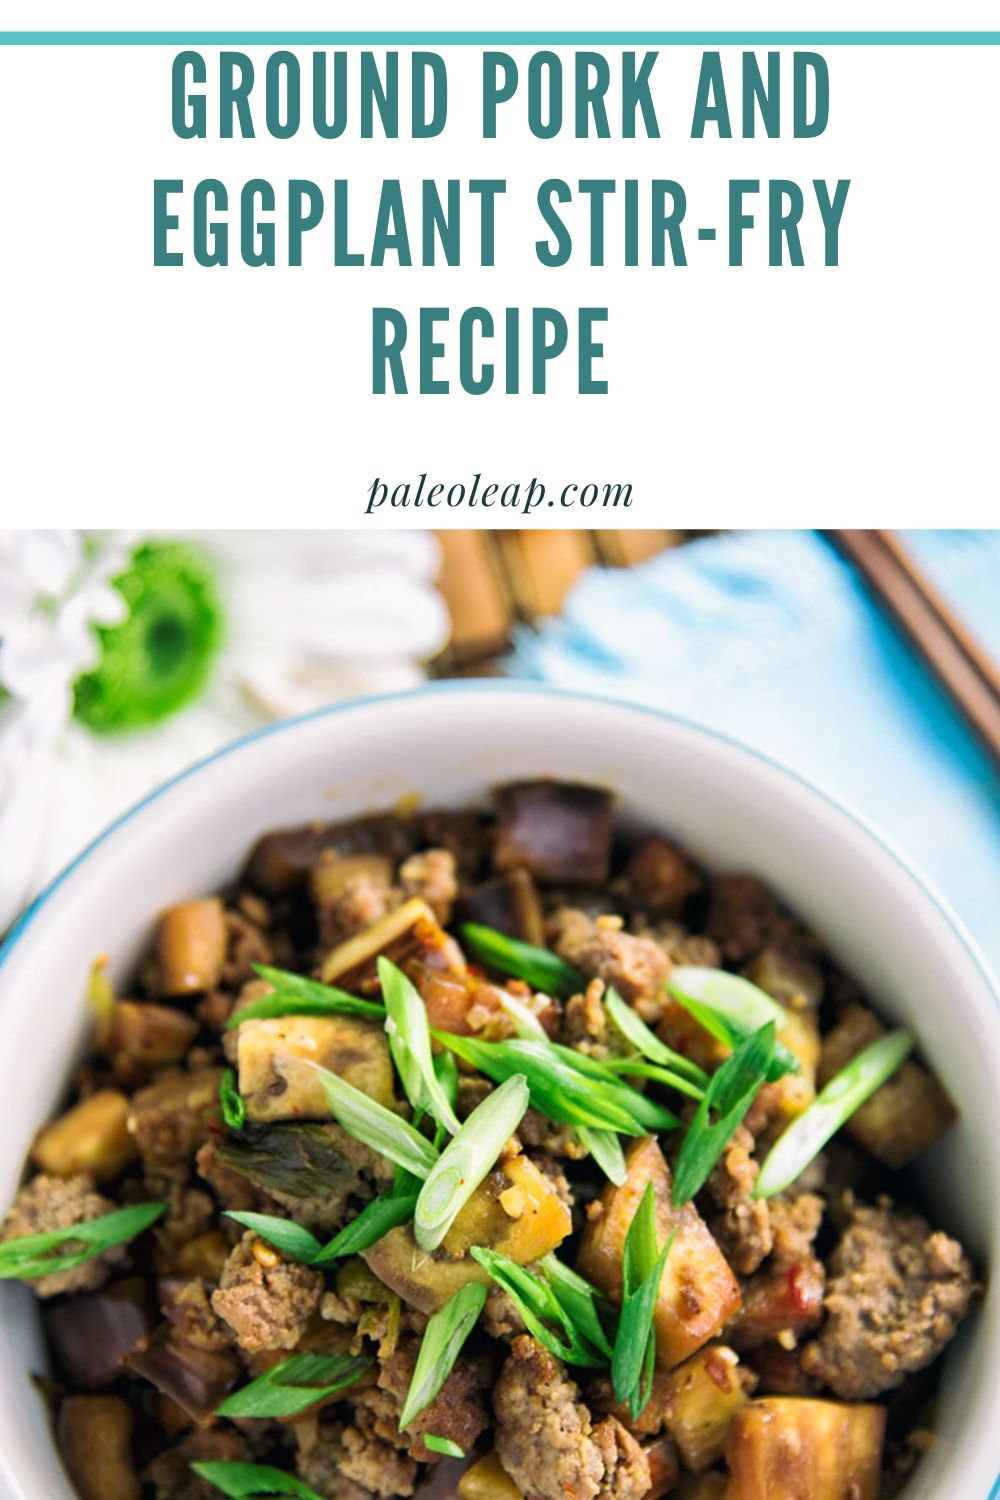 Ground Pork And Eggplant Stir-Fry Recipe | Paleo Leap